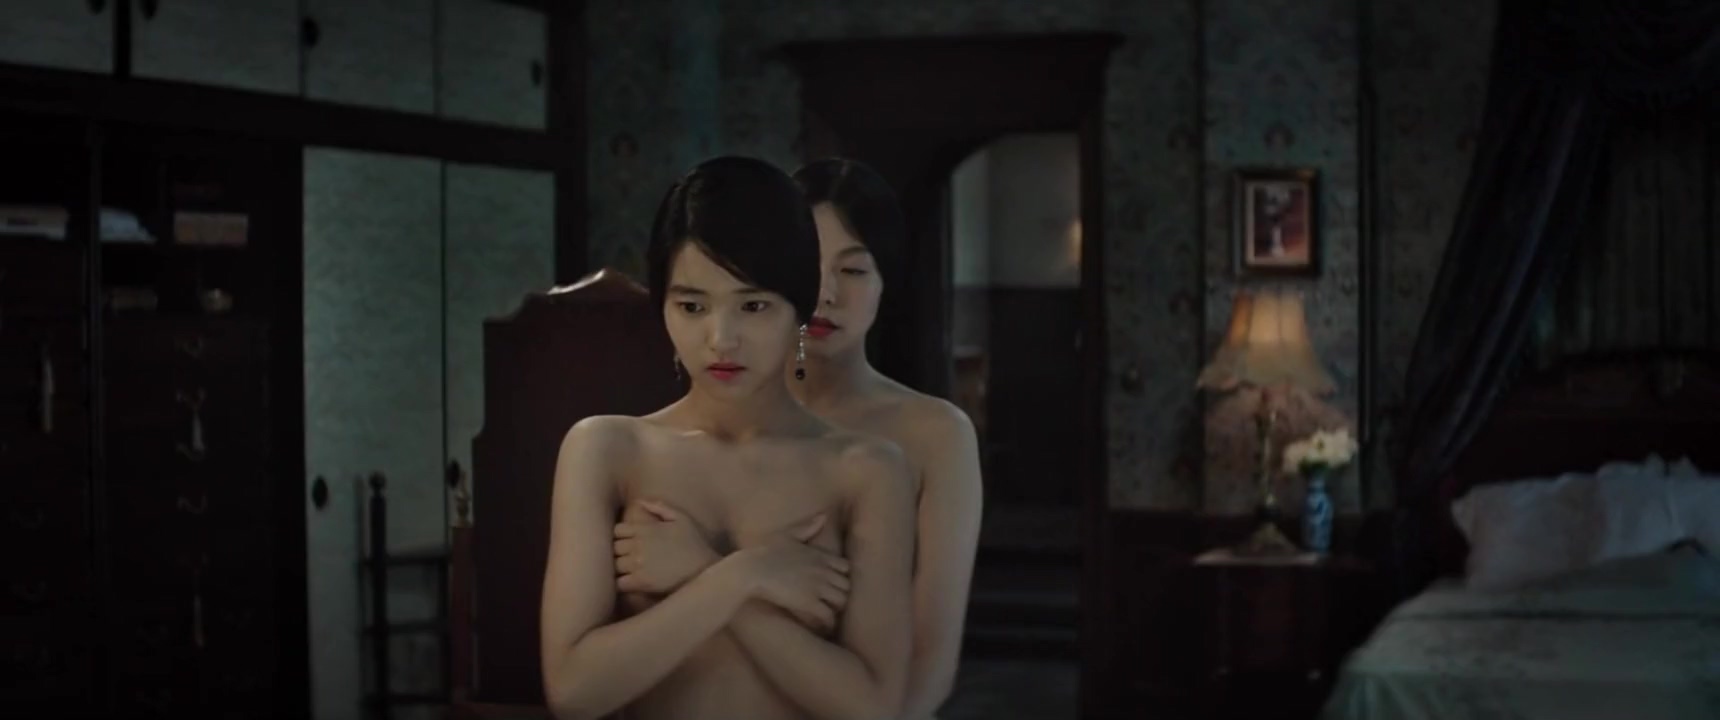 Beautiful asian teens having sensual lesbian sex. Amazing scene from hot  Korean movie